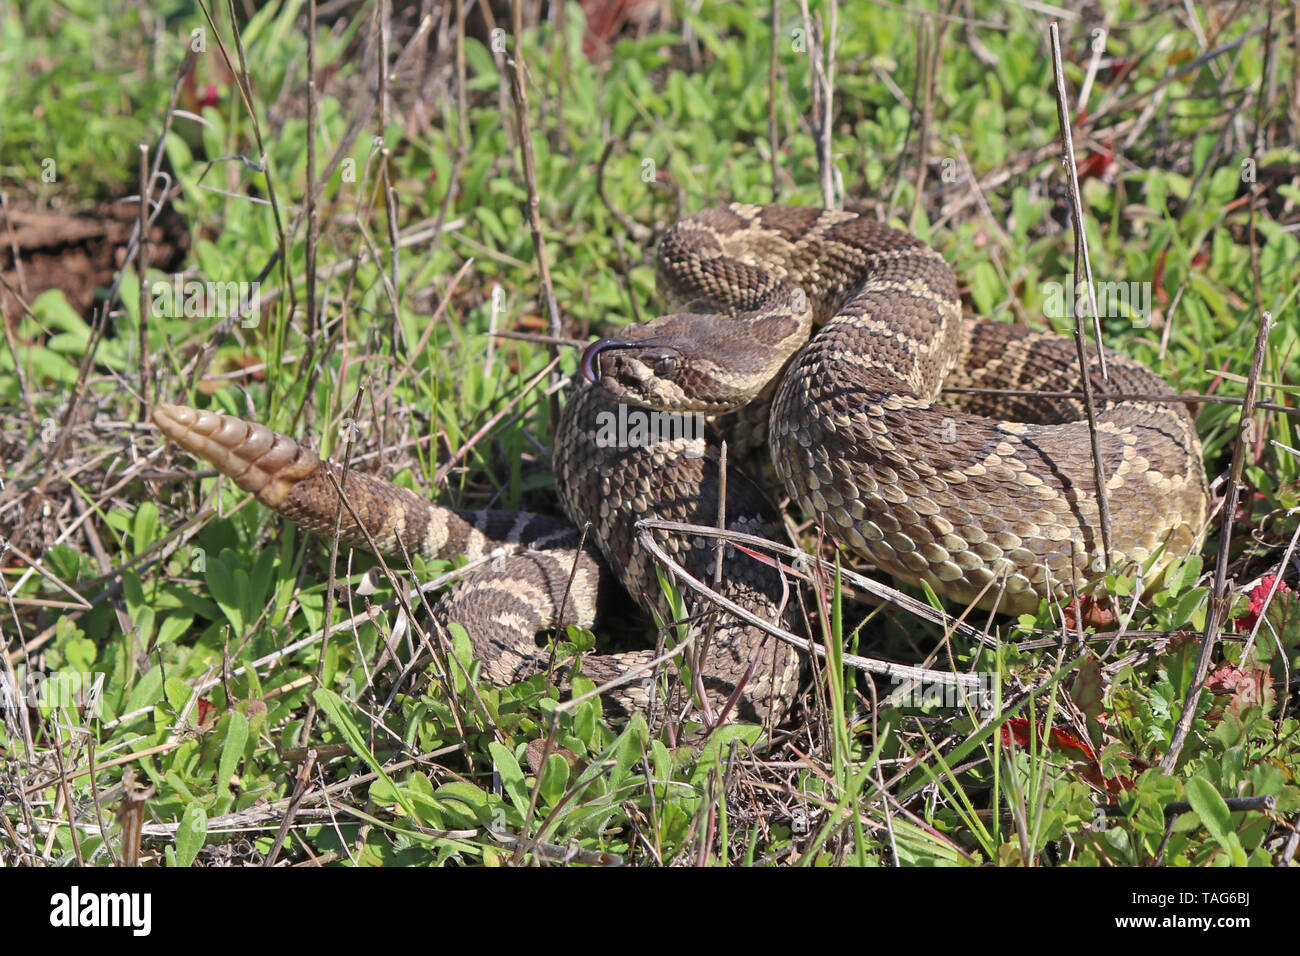 Southern Pacific Rattlesnake (Crotalus oreganus helleri) Stock Photo